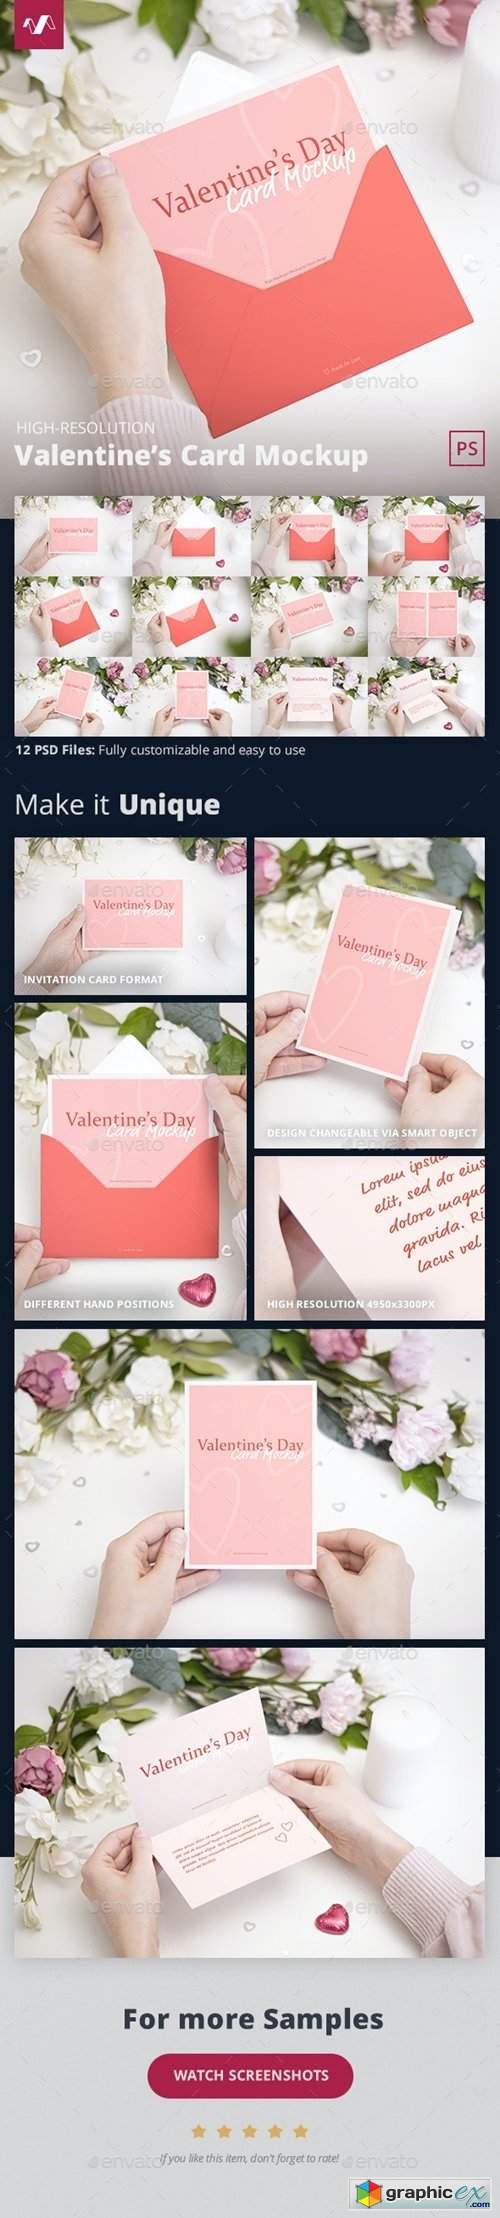 Valentines Day Card Mockup 